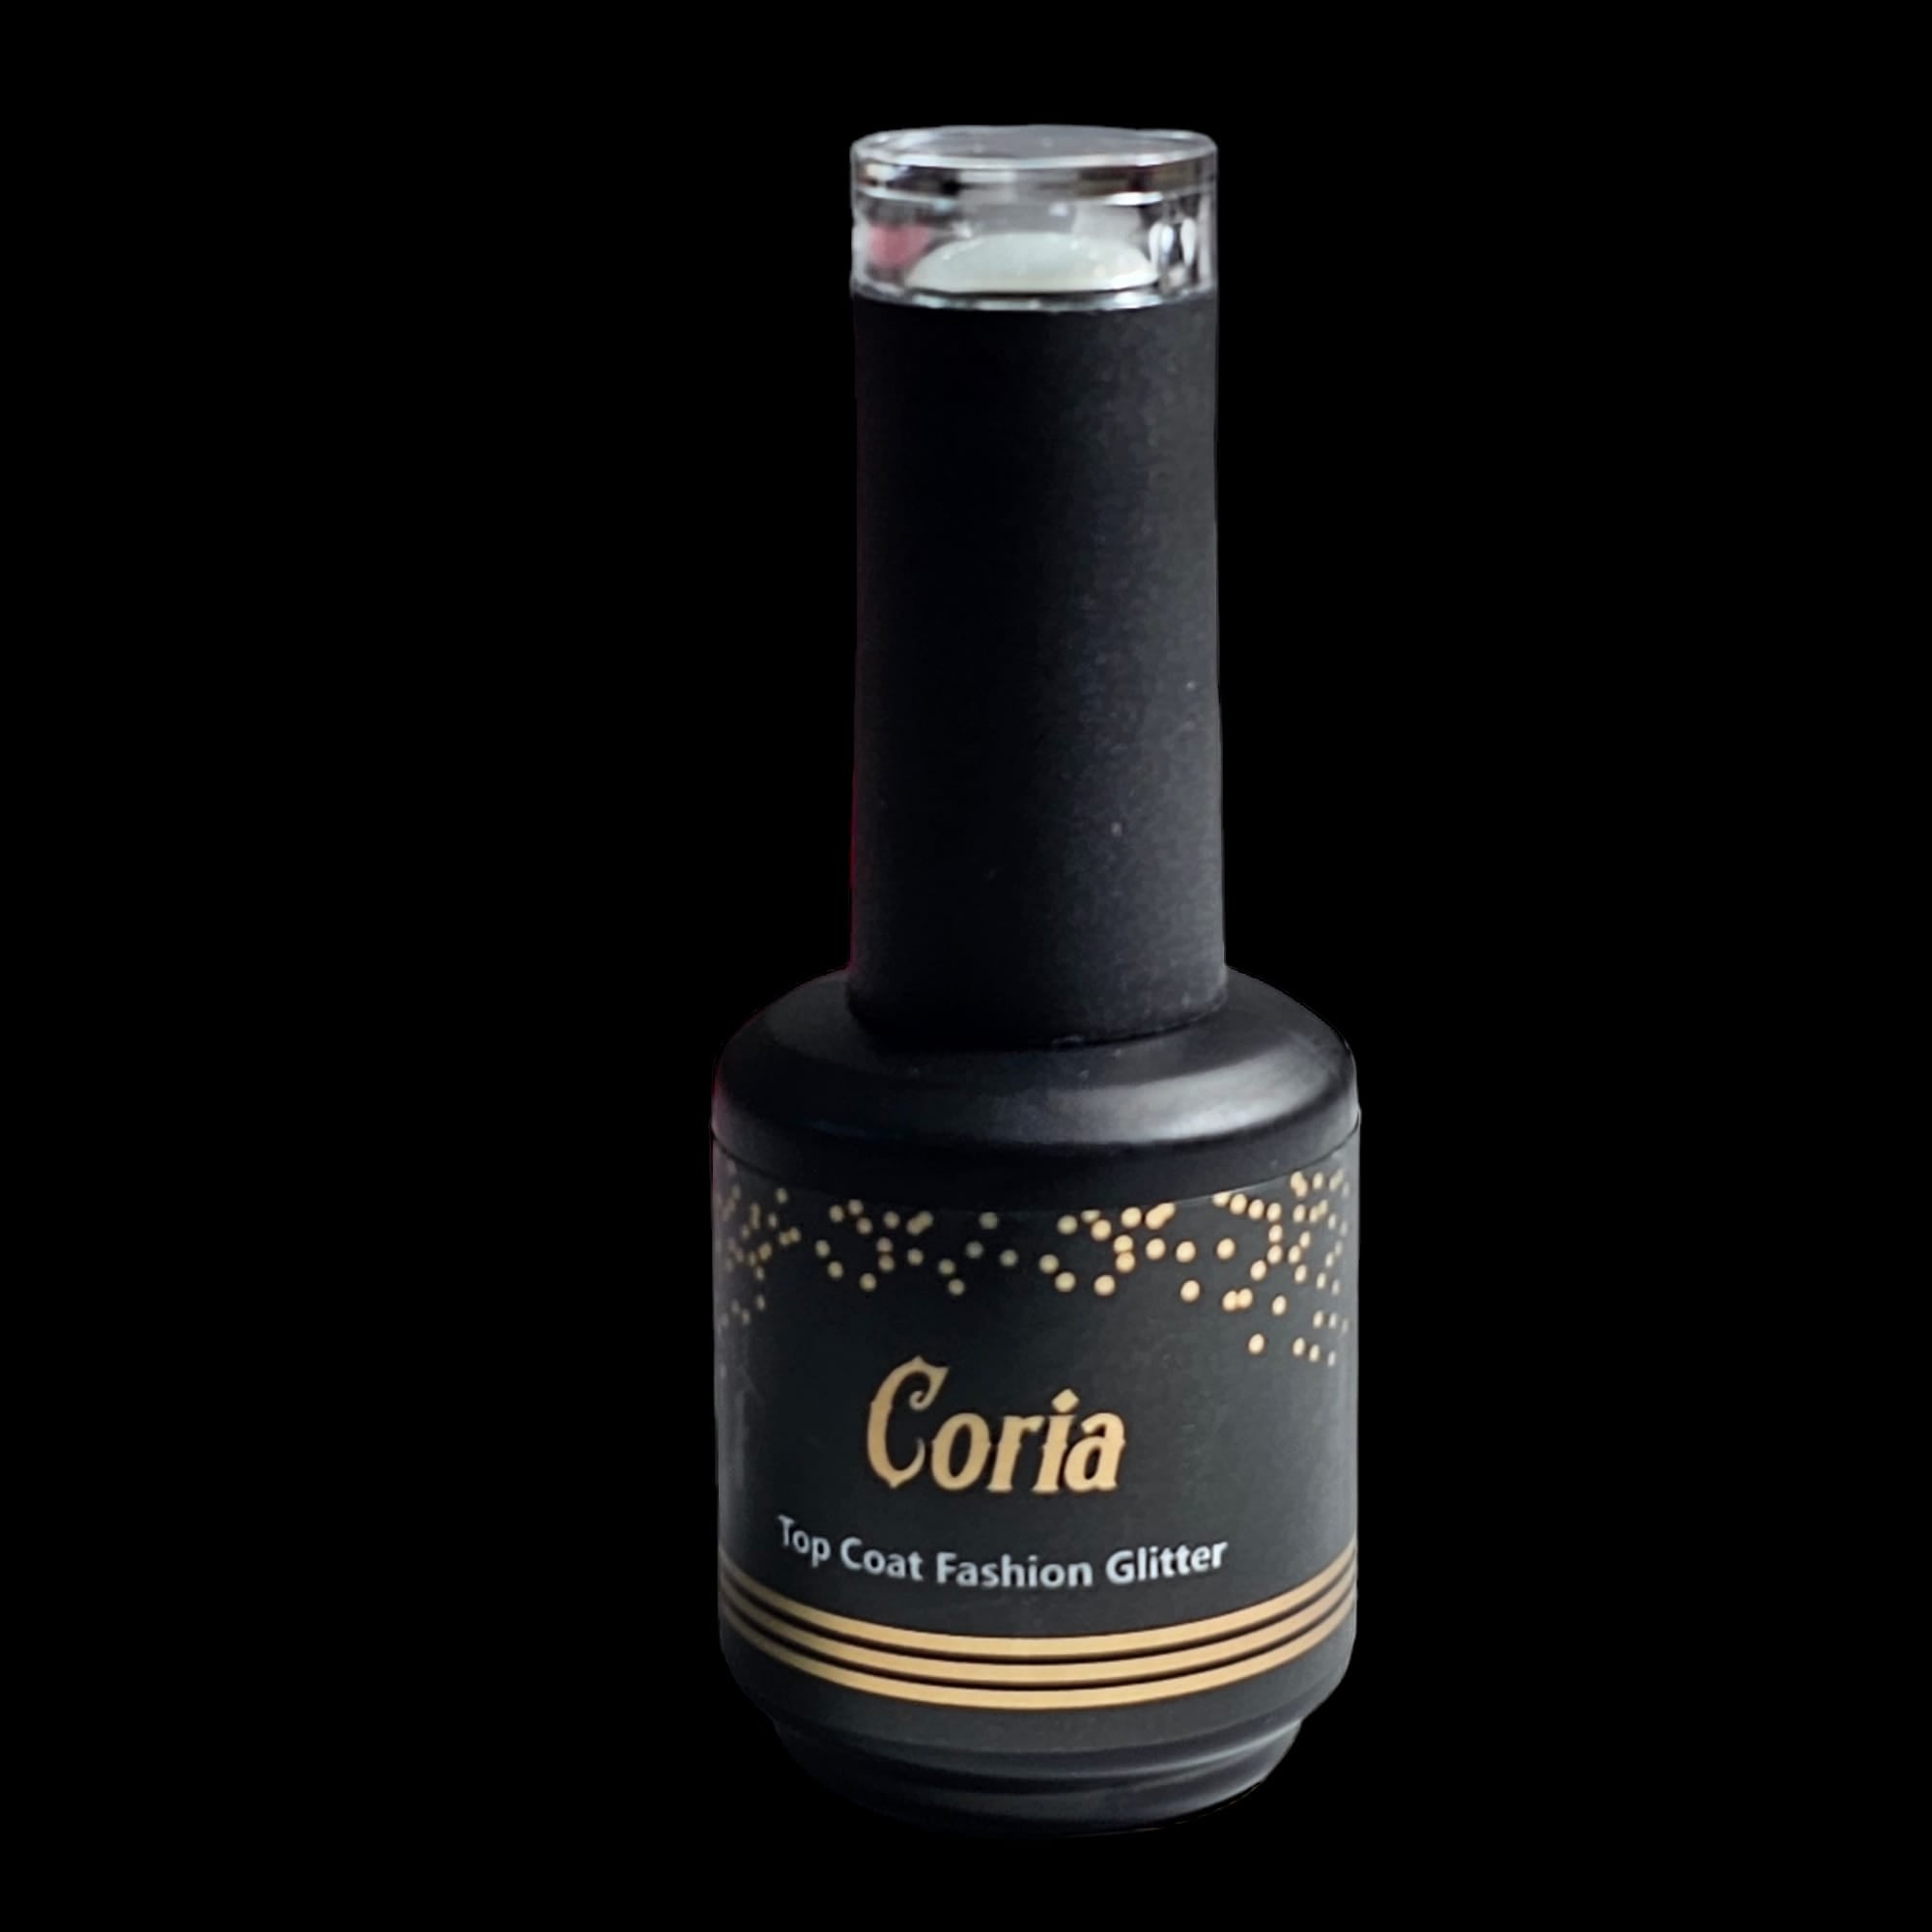 Top Coat Fashion Glitter Coria 15 ml 100